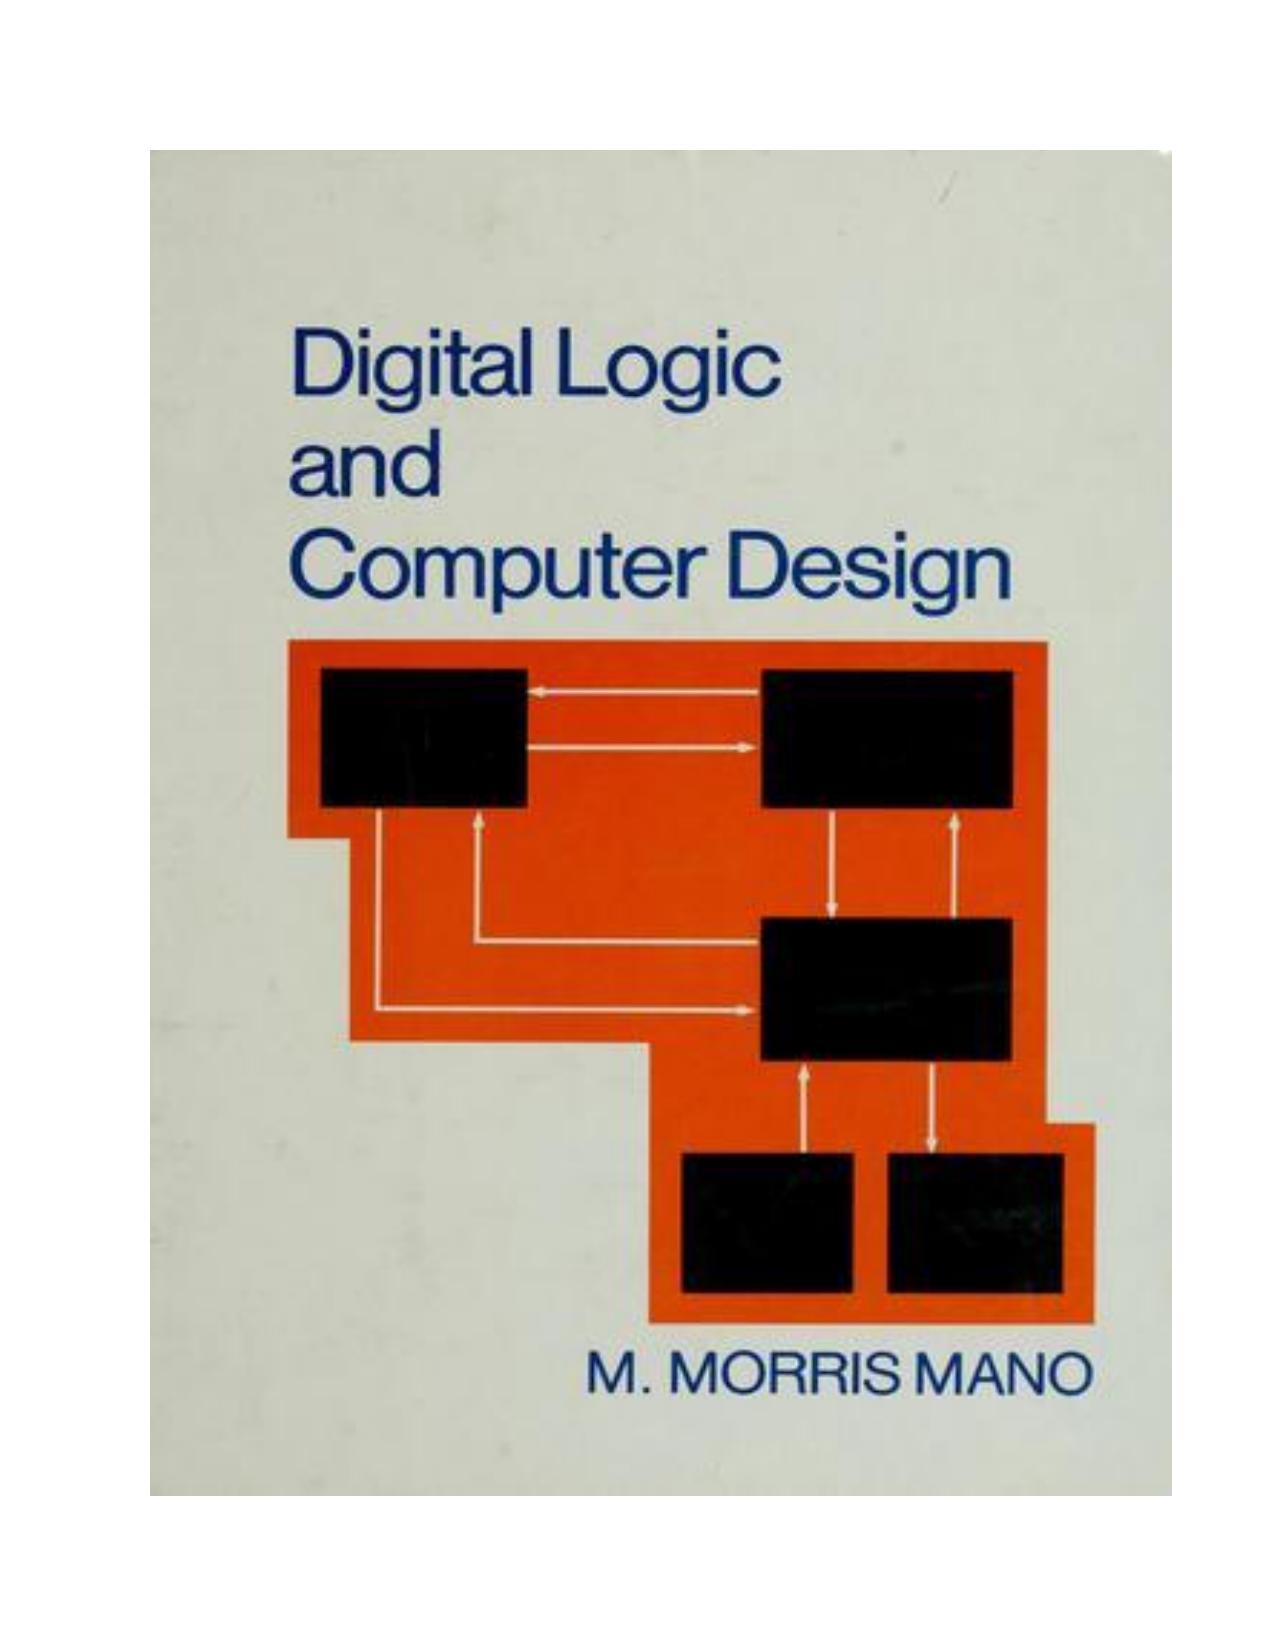 Digital Logic And Computer Design By M. Morris Mano ( PDFDrive )